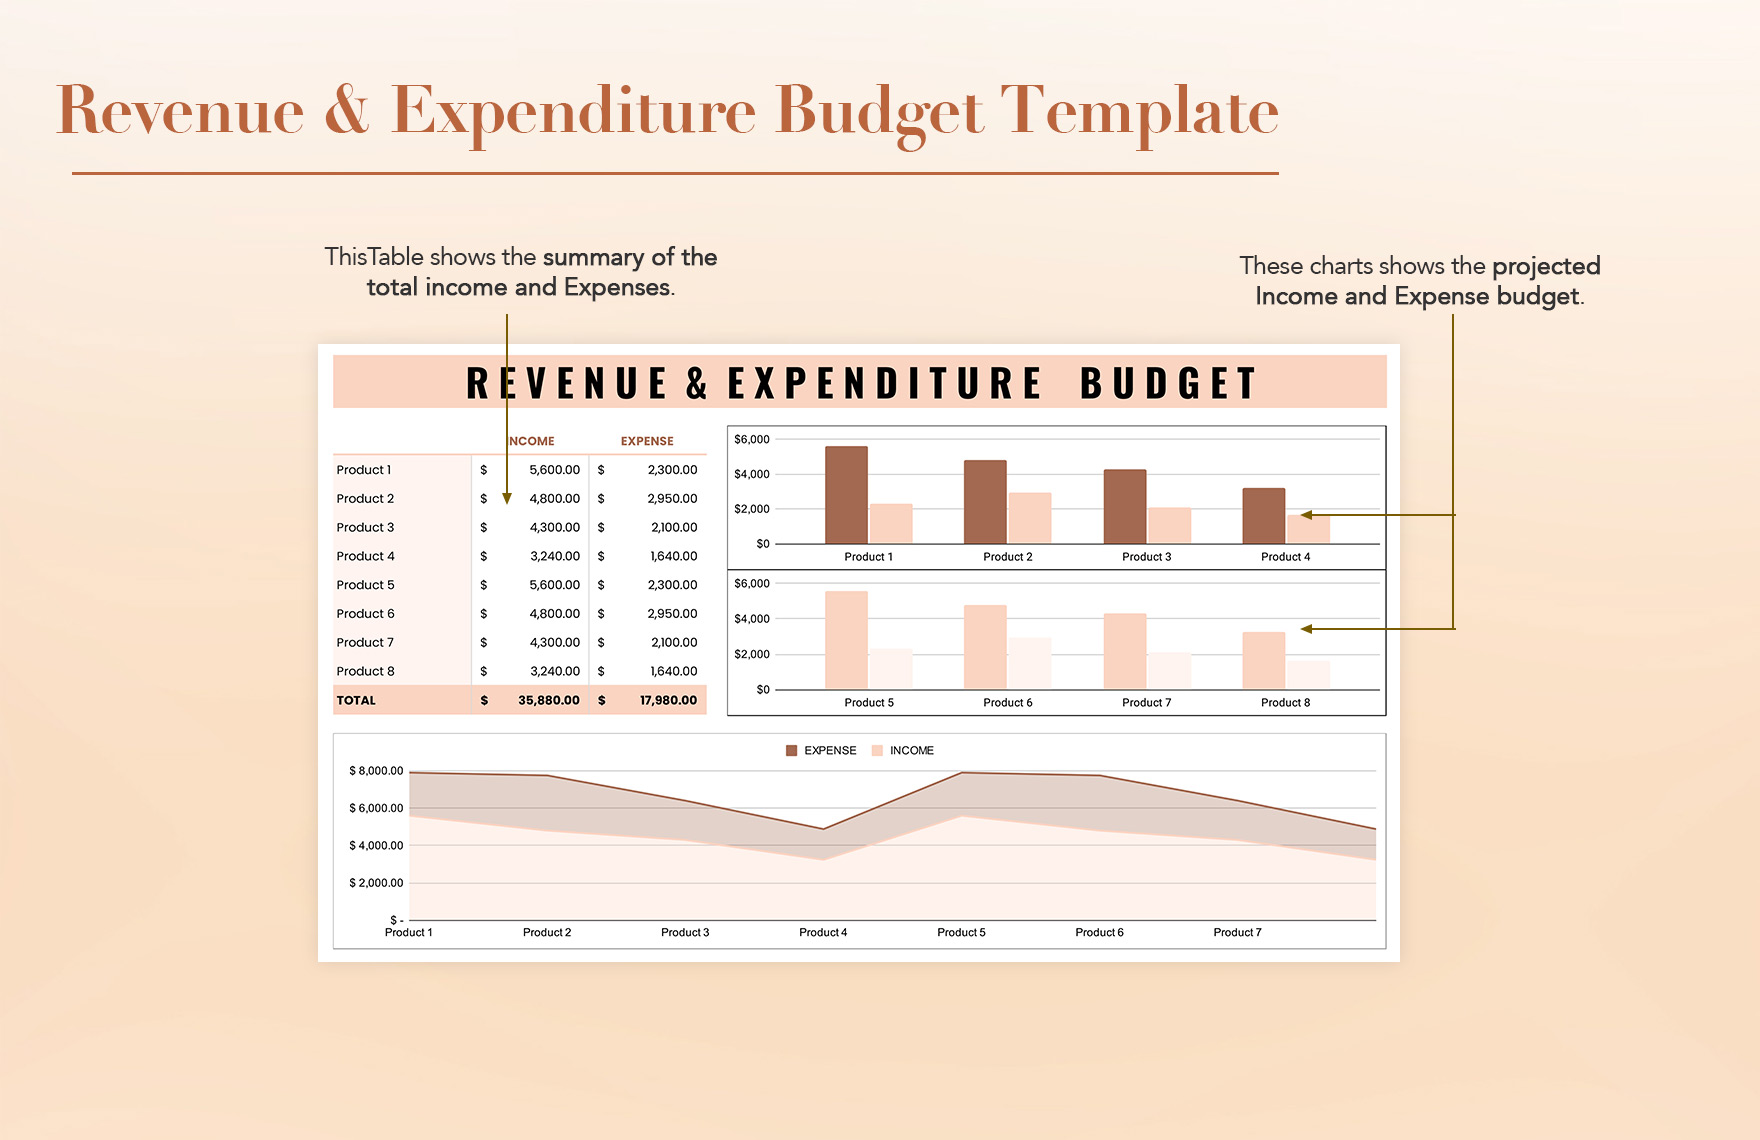 Revenue & Expenditure Budget Template